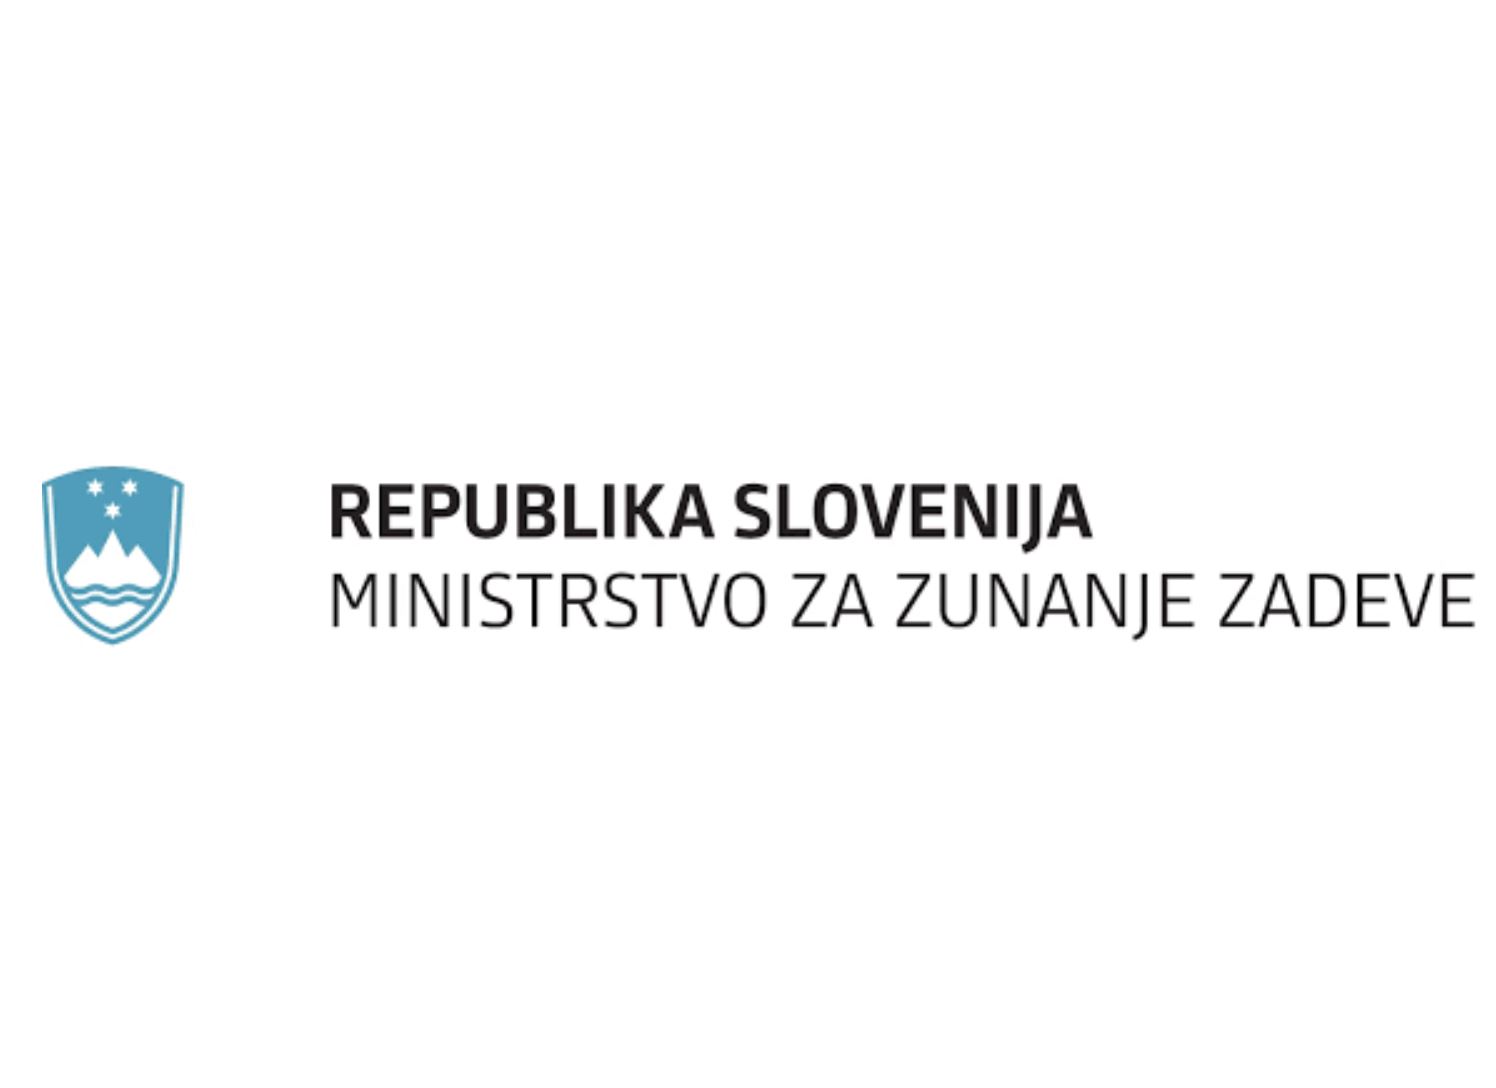 MZZ logo